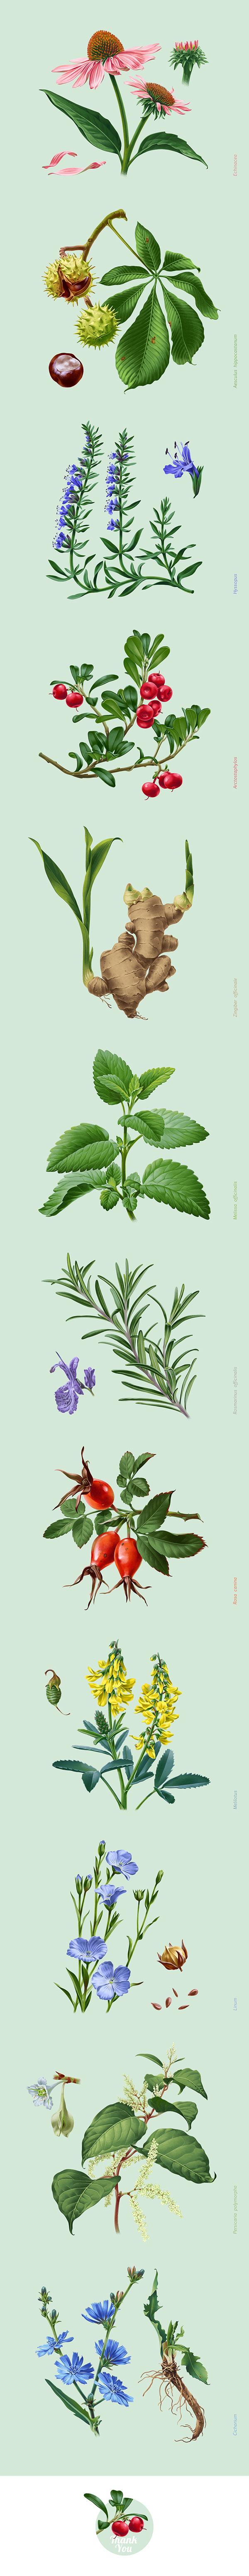 Medical Plants